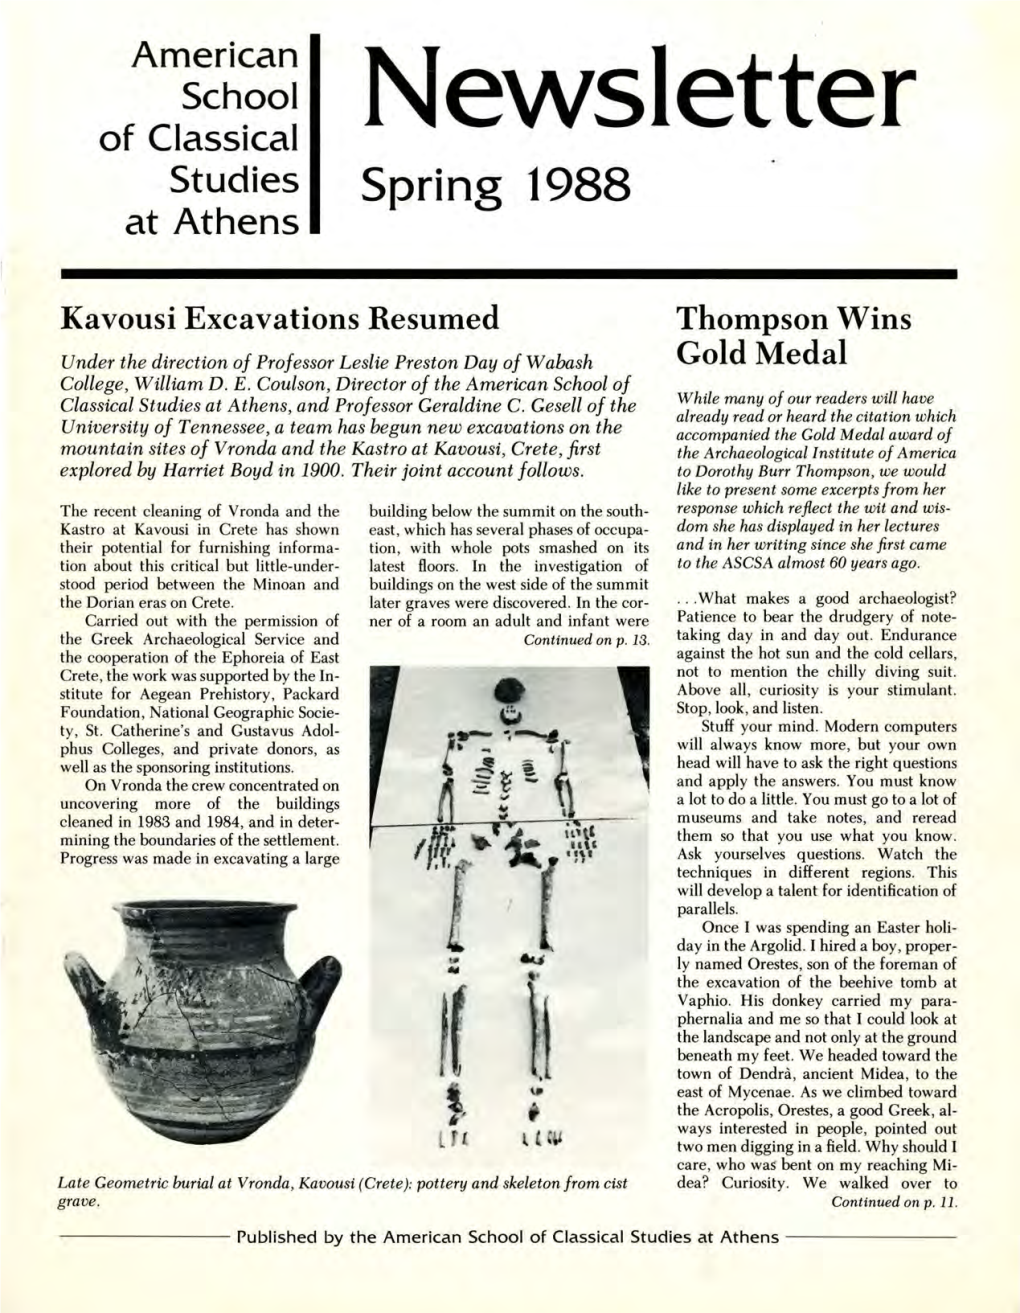 Newsletter Studies Spring 1988 at Athens